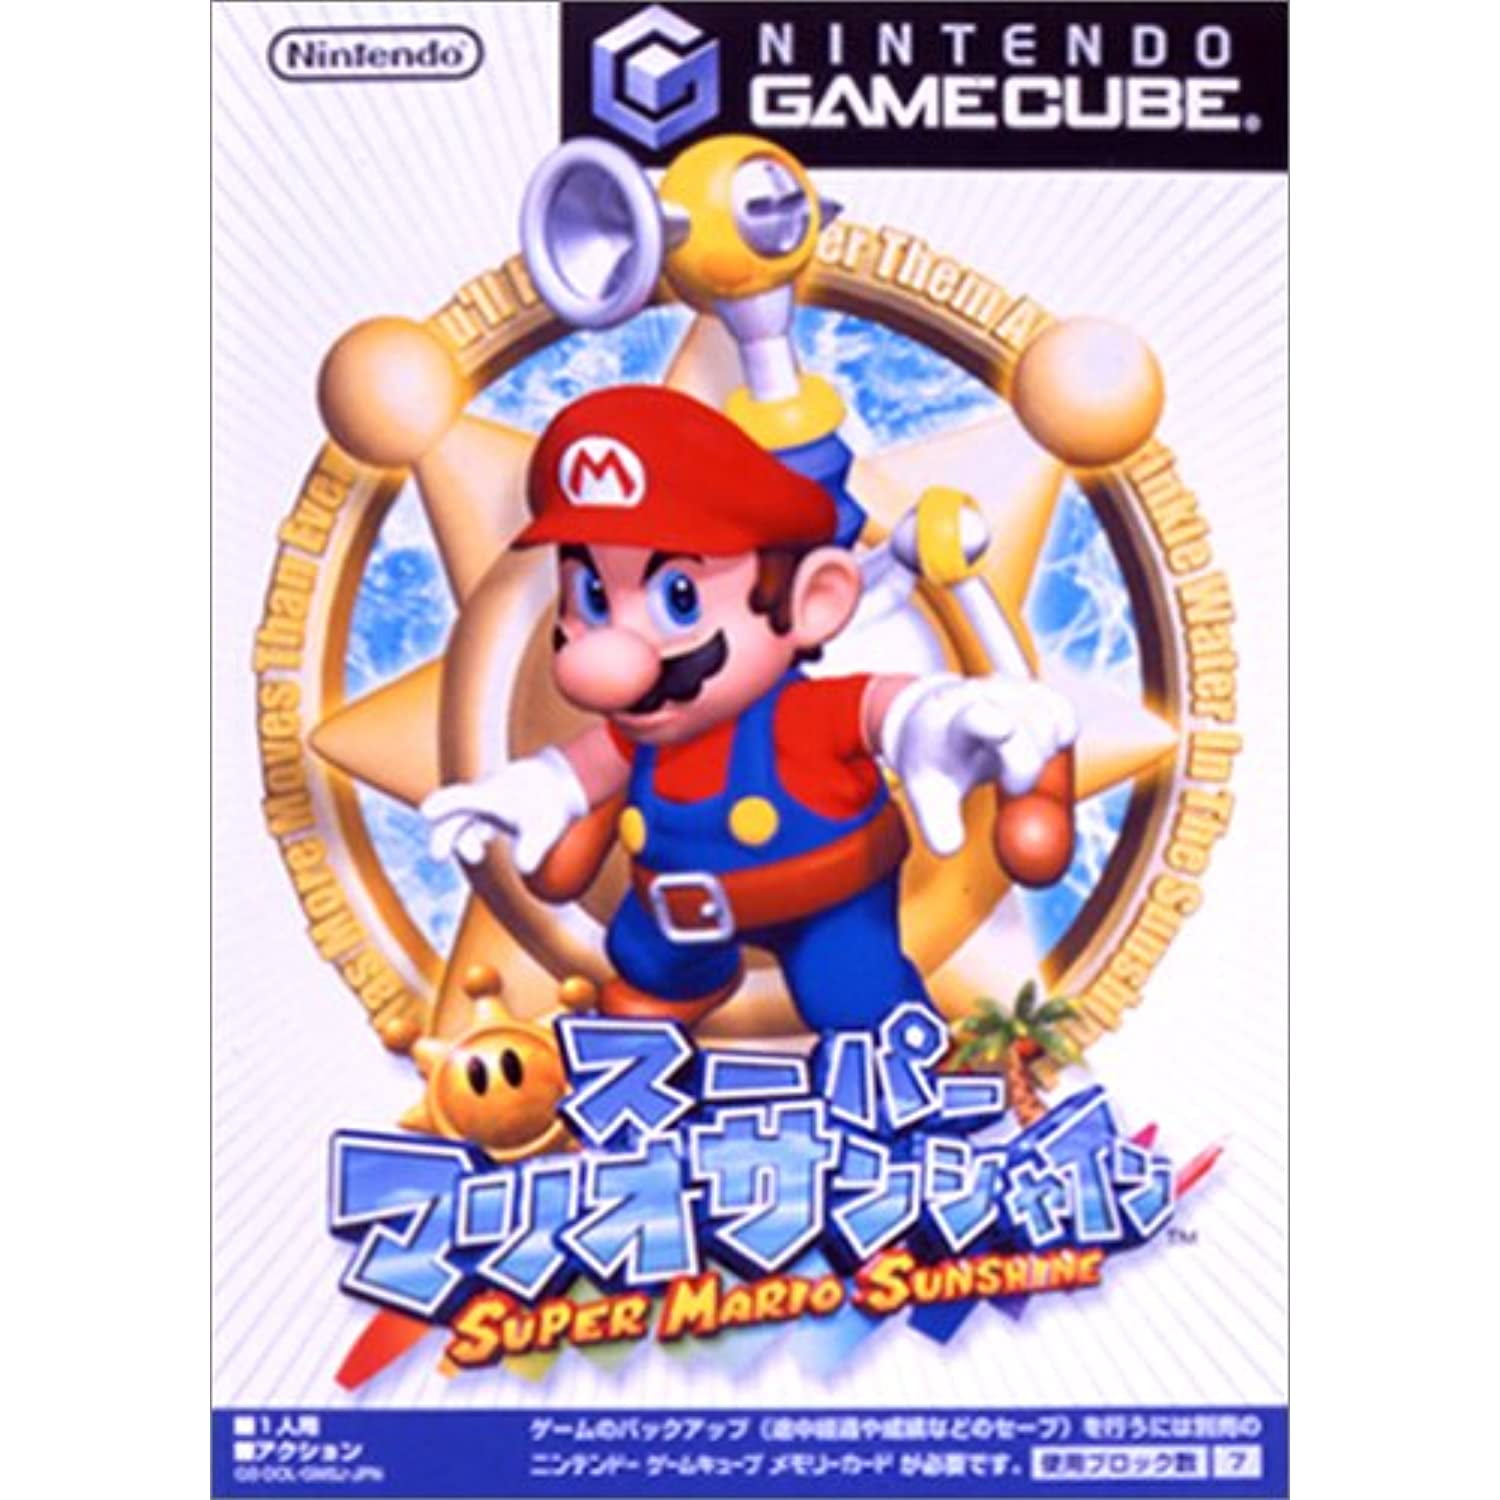 Nintendo GameCube Luigi's Mansion NTSC-J (Japan) Video Games for sale